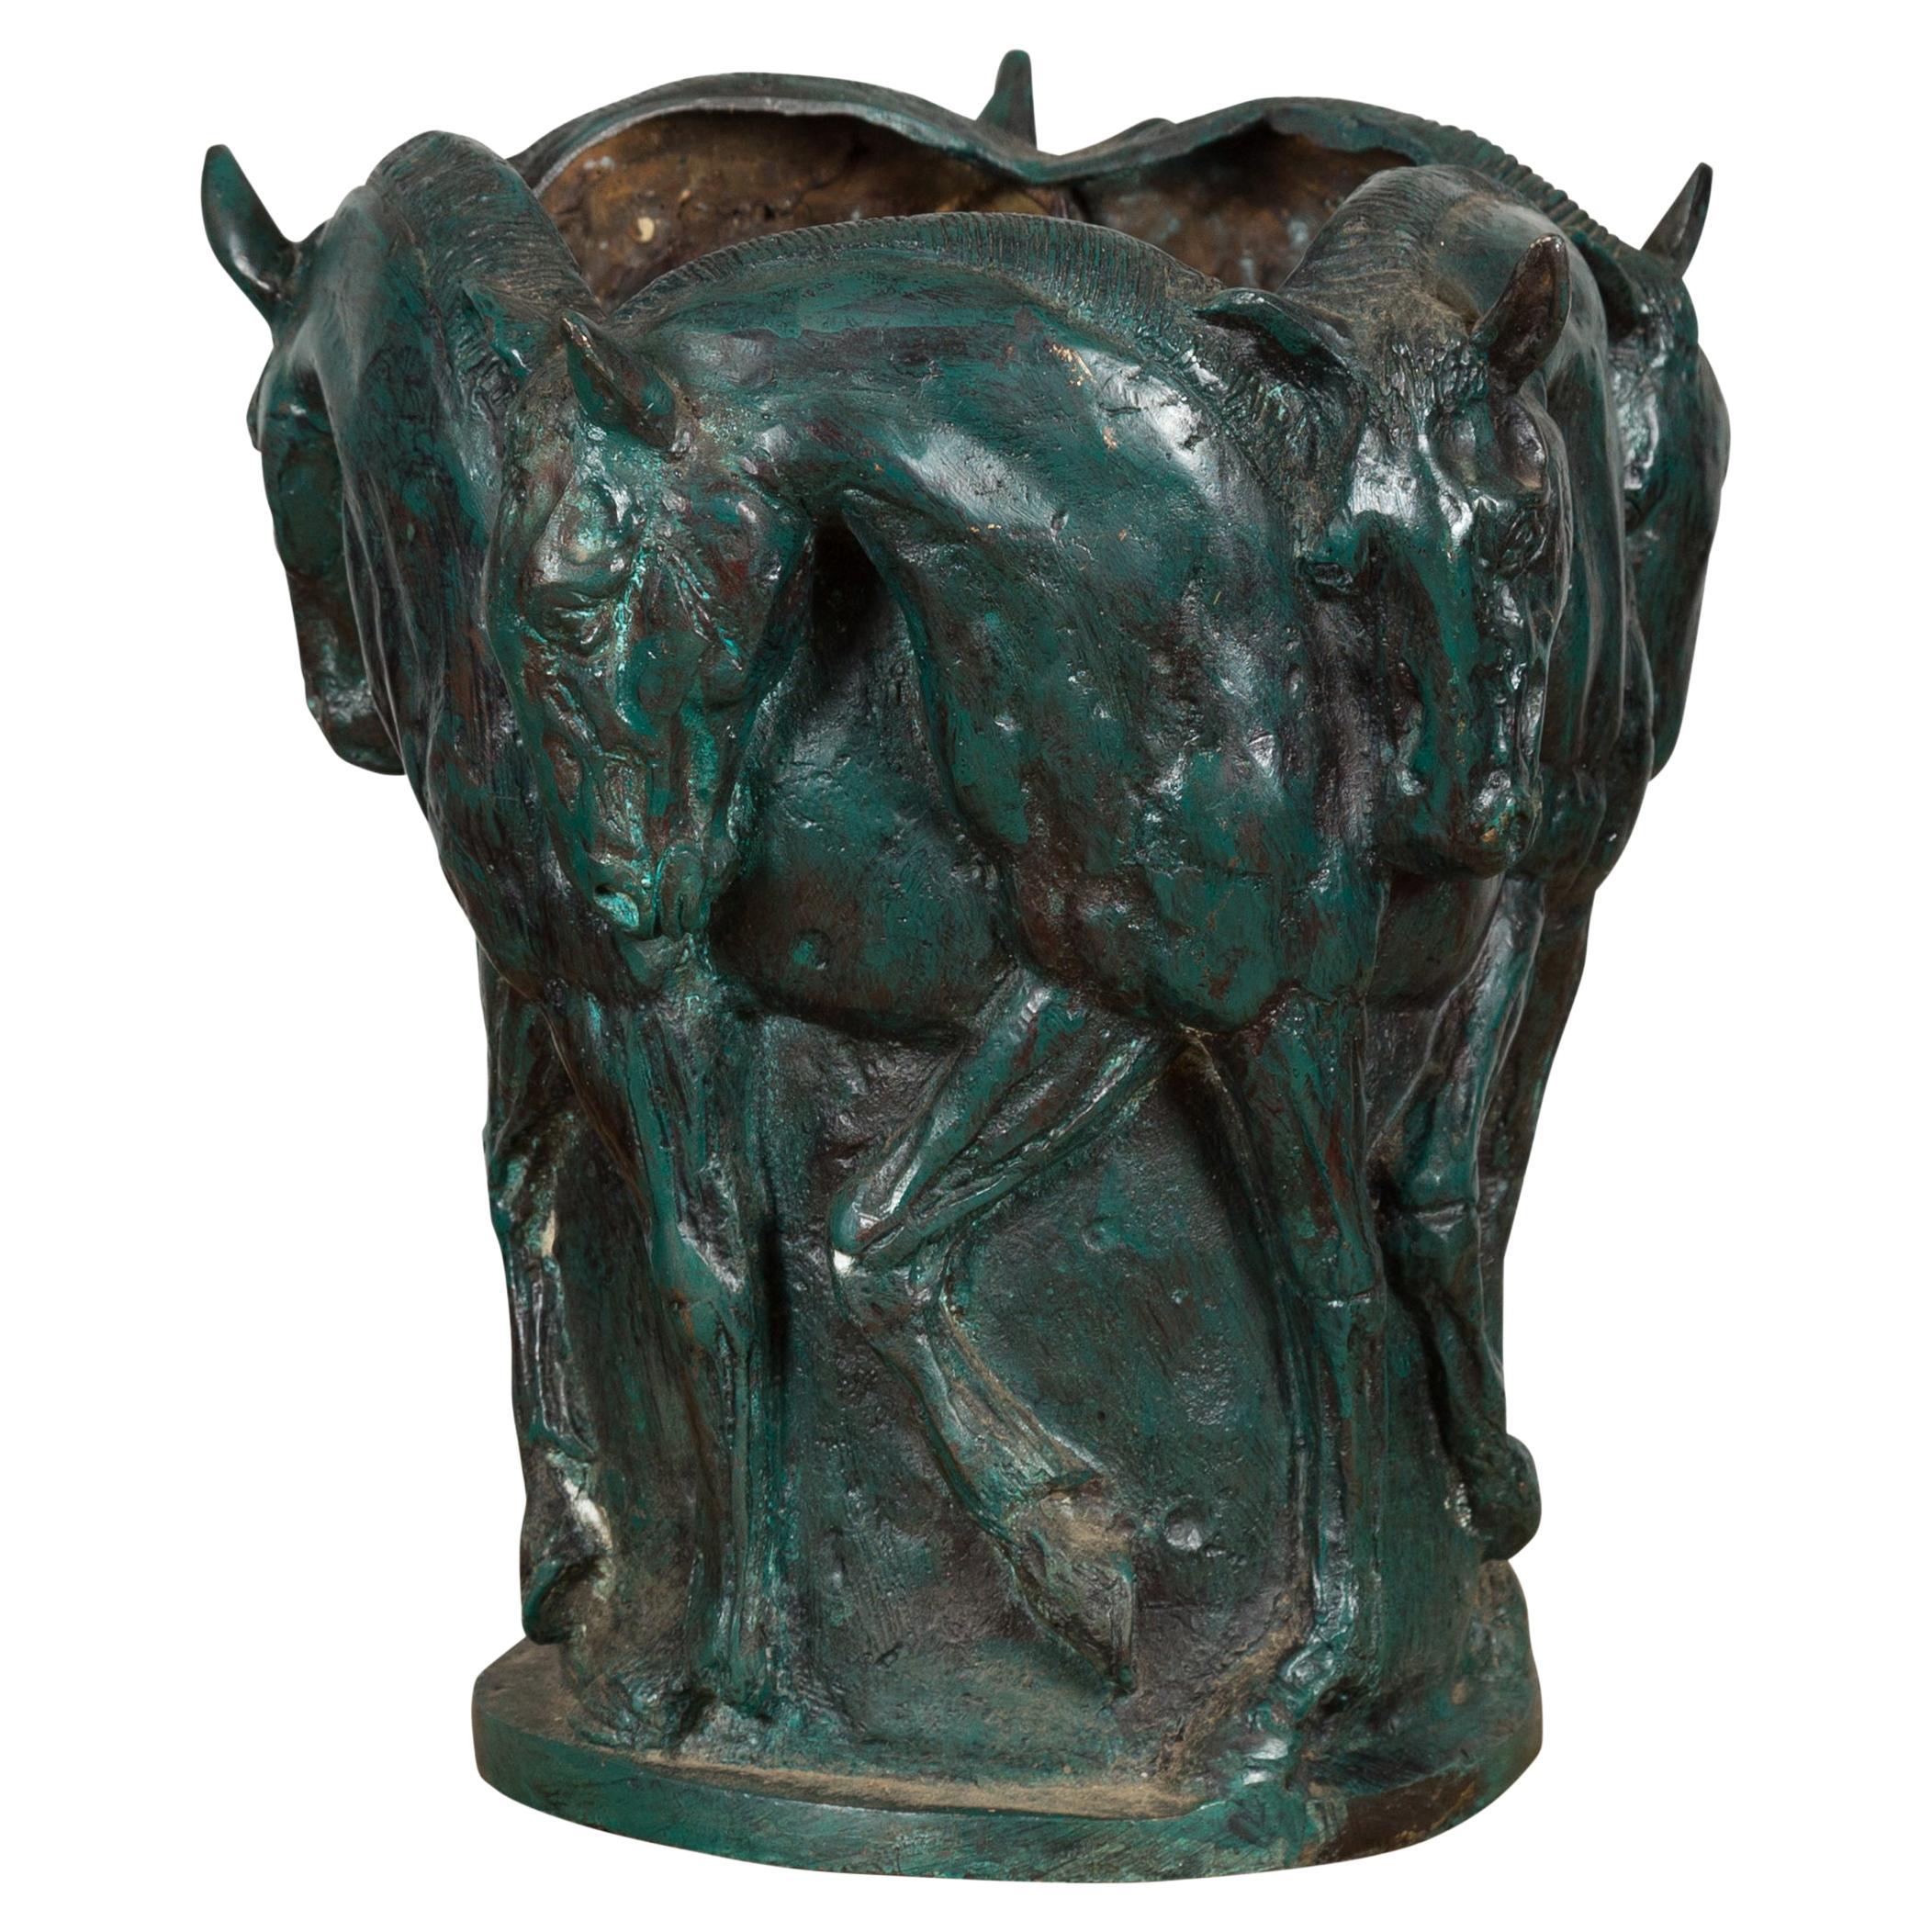 Verdigris Bronze Planter with Frieze of Passing Horses Cast in High Relief 